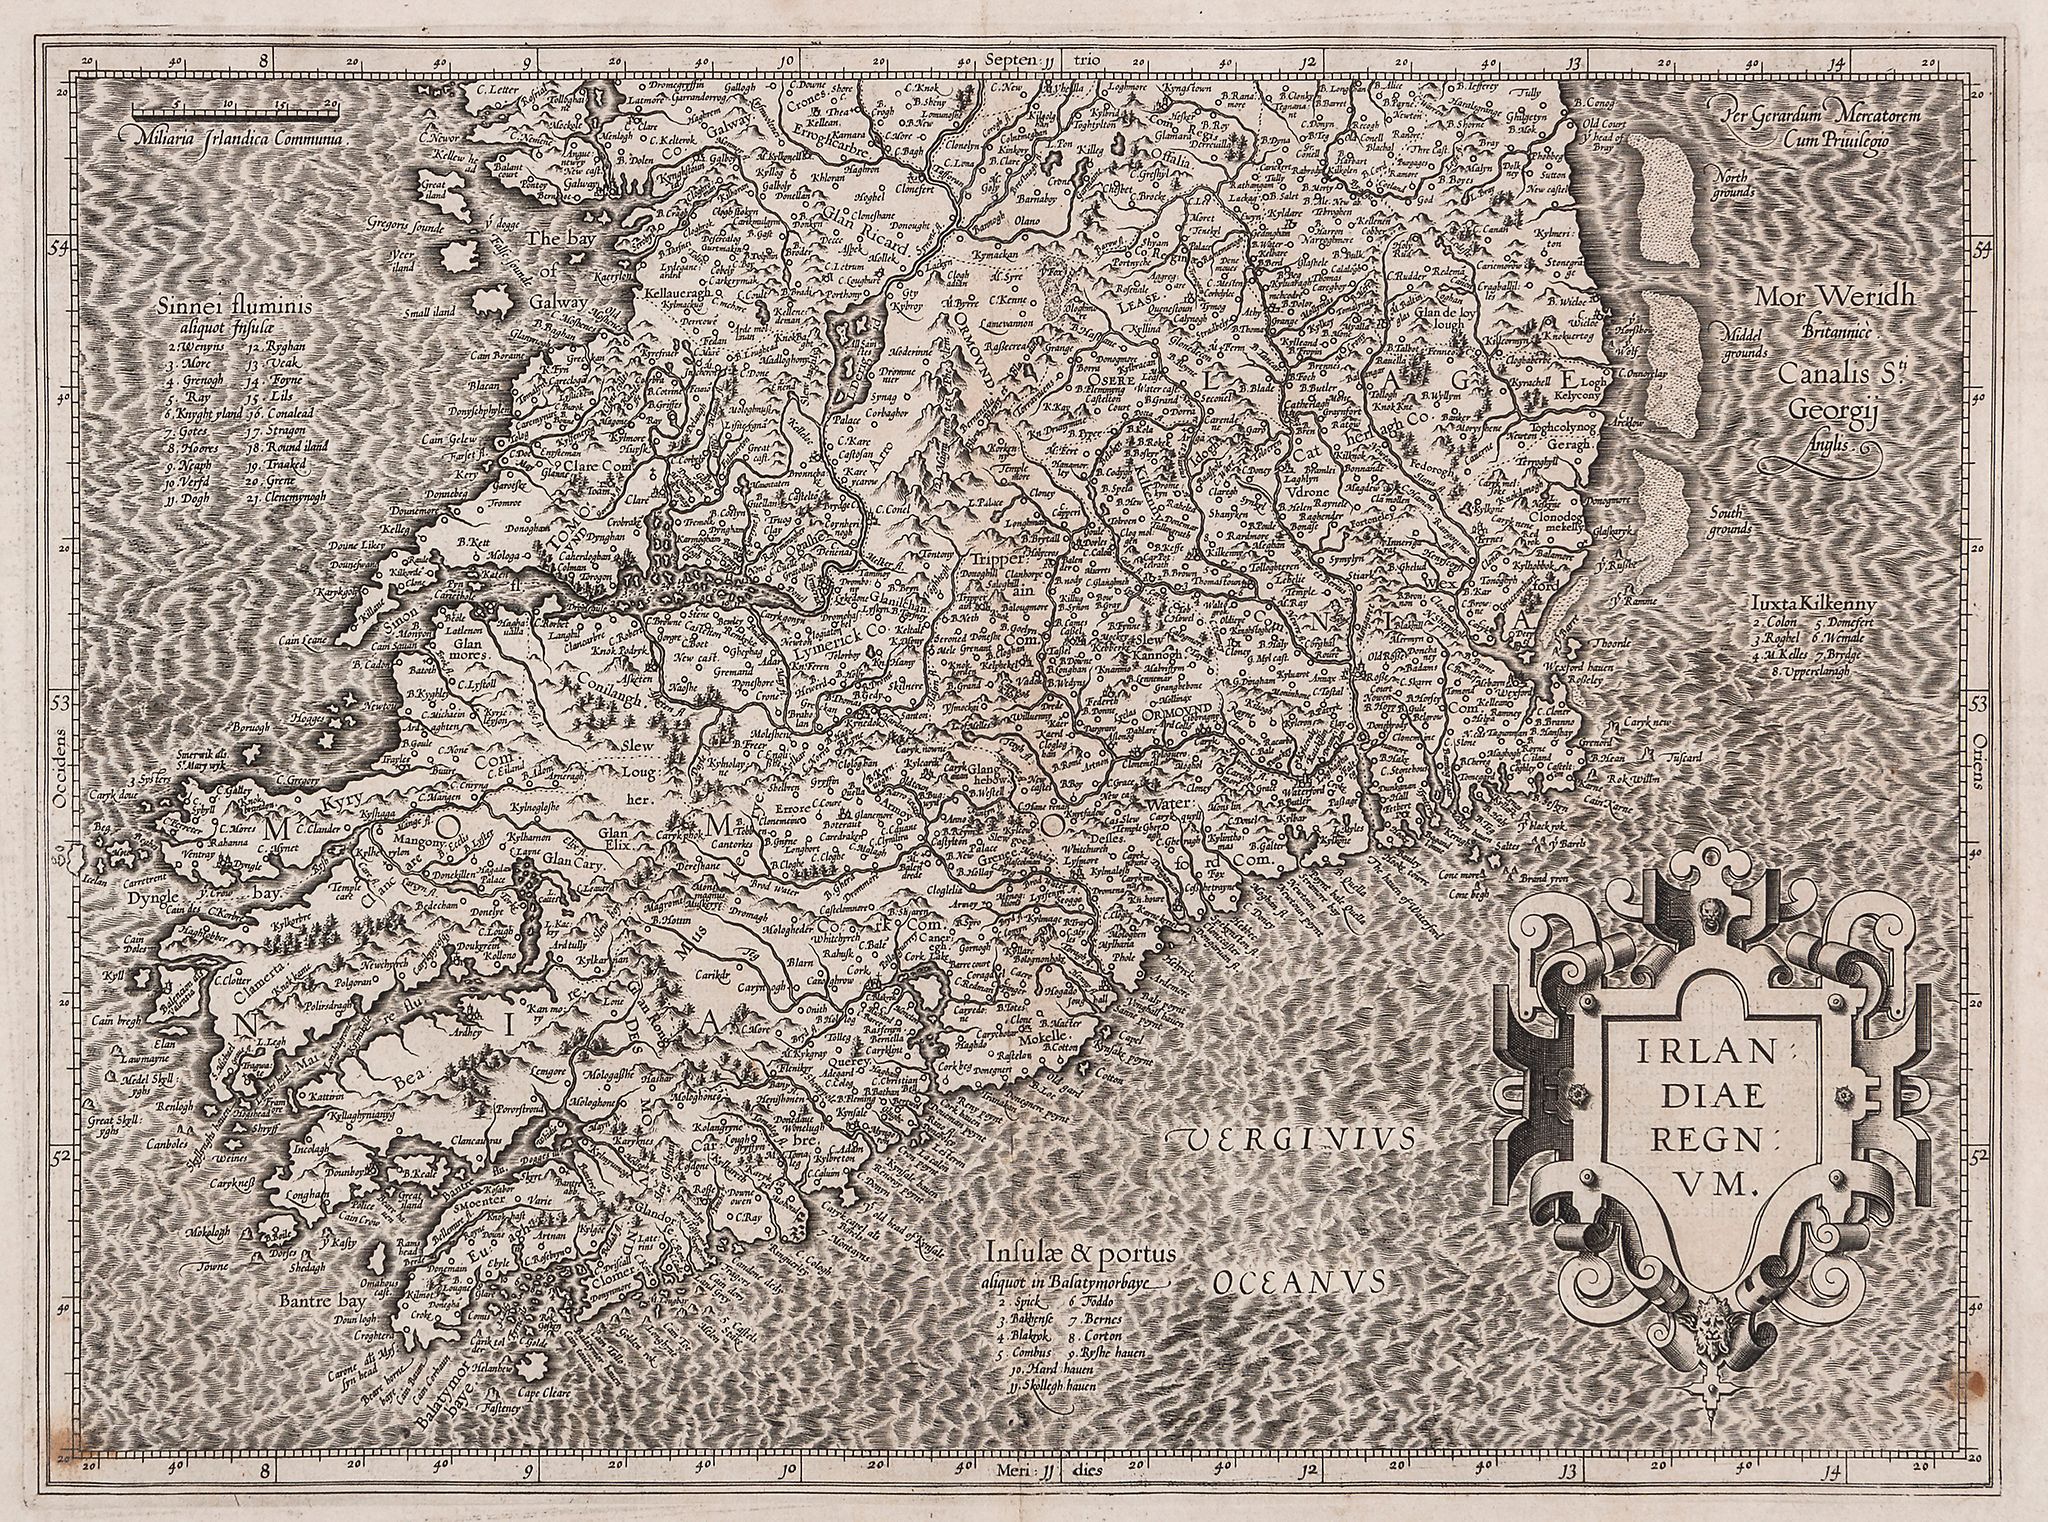 Mercator (Gerard) - Irlandiae Regnum, Ireland in 2 full sheets, strapwork title cartouche in lower